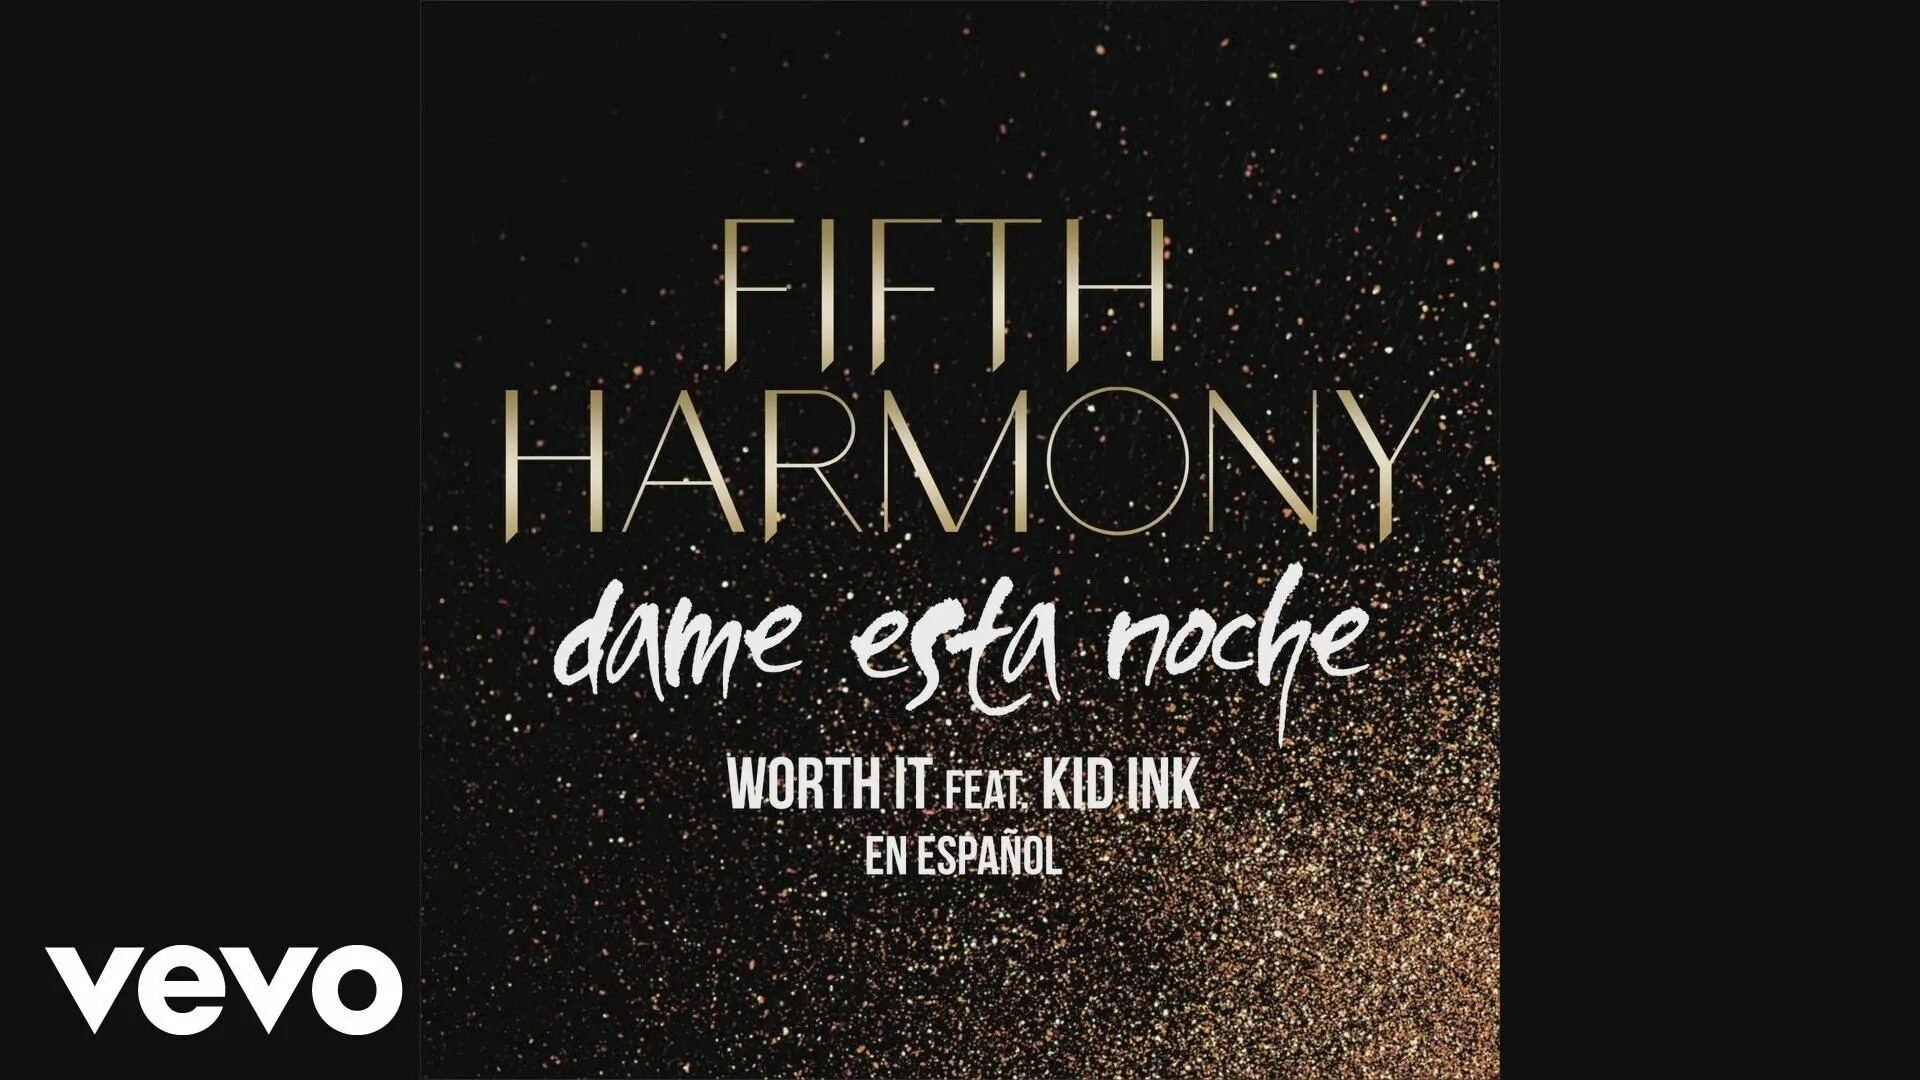 Worth it feat. Fifth Harmony Worth it. Worth it исполнитель Fifth Harmony. Fifth Harmony - Worth it (feat. Kid Ink & Pitbull) (disa Remix). Worth it - Fifth Harmony ft. Kid Ink клип.